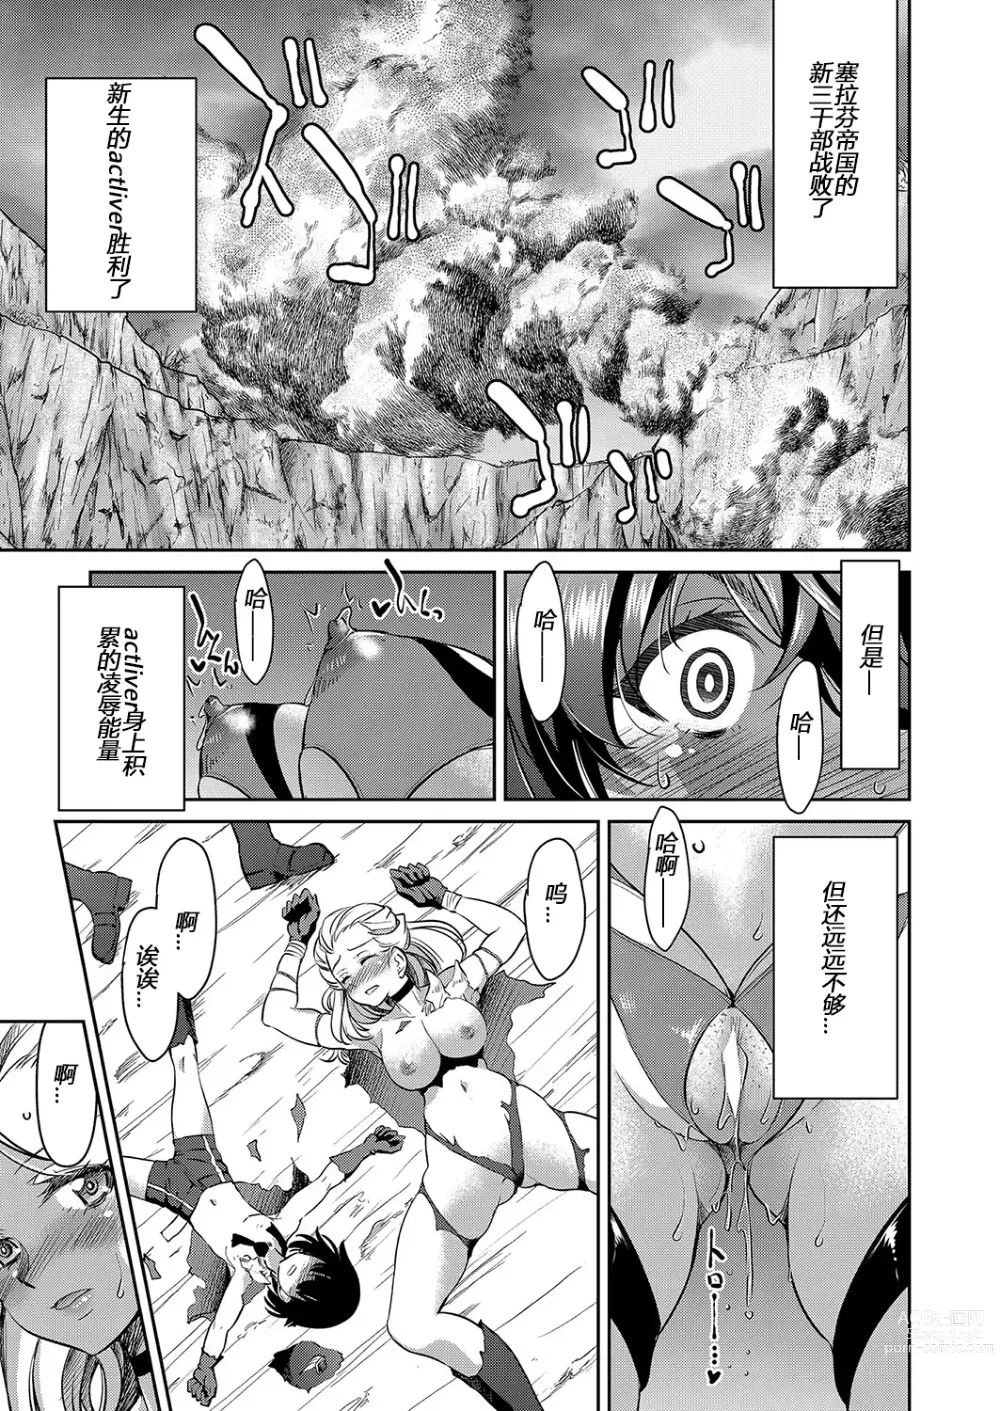 Page 179 of manga Yousei Sentai Actliver